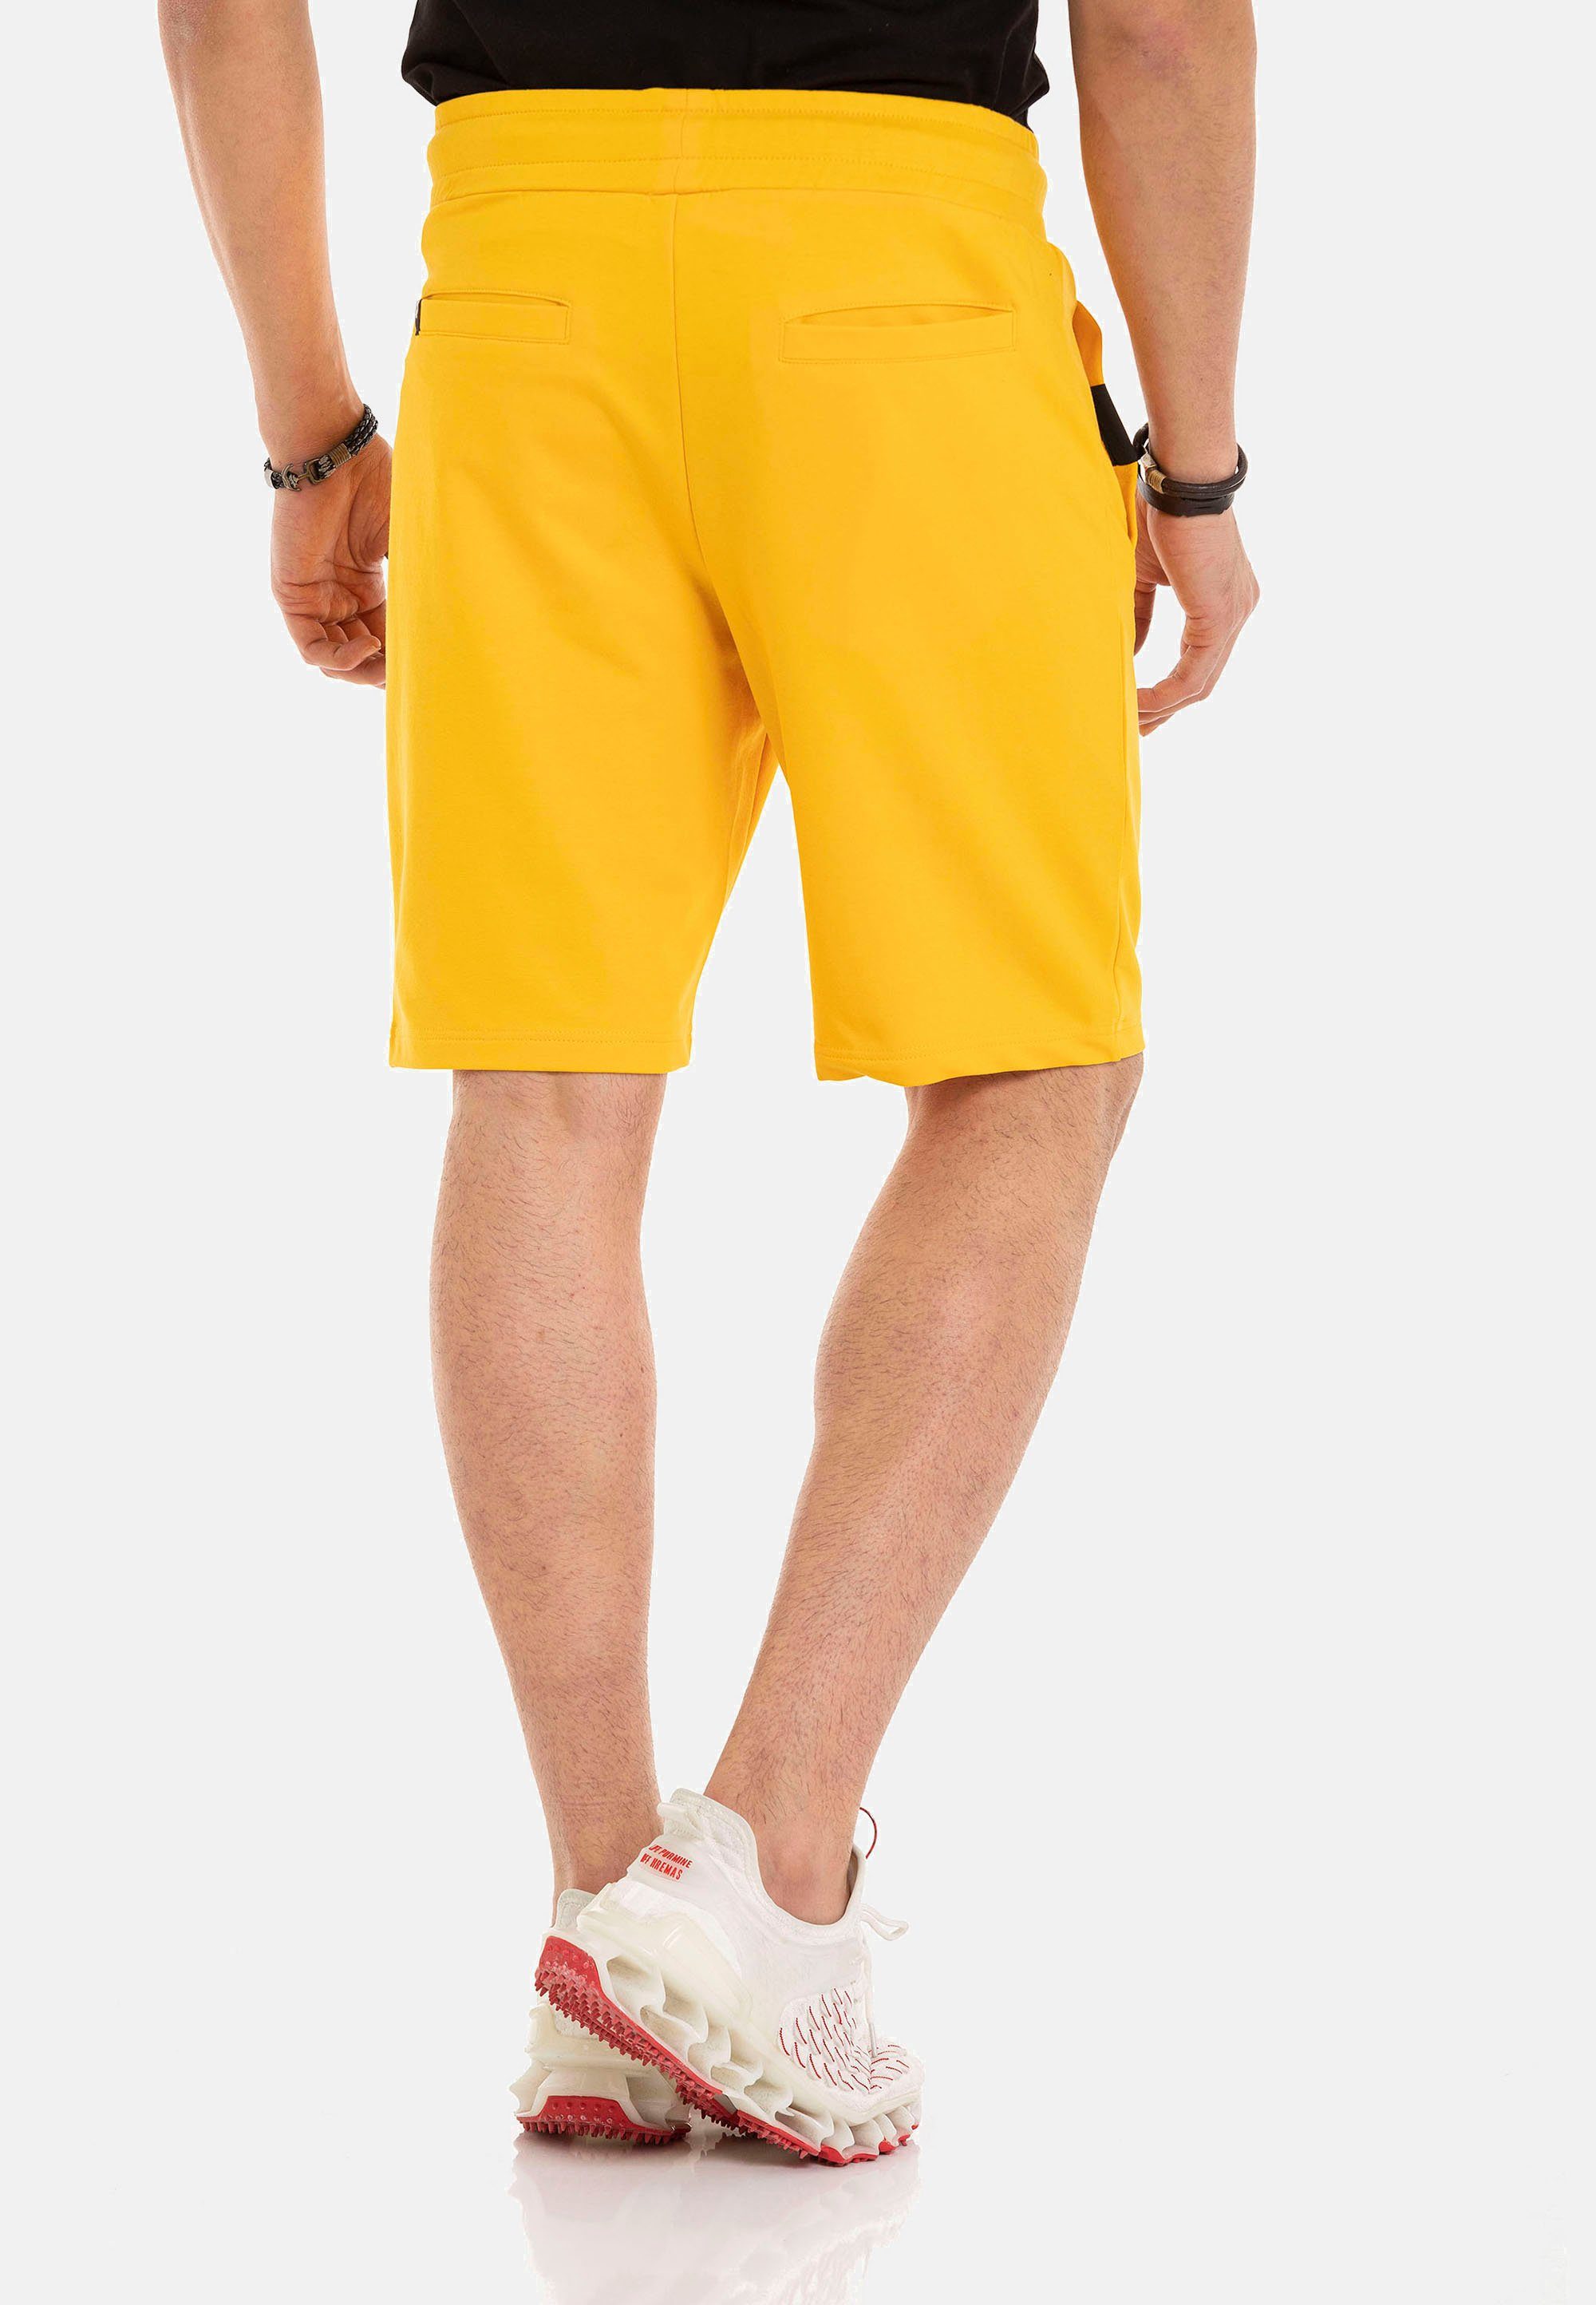 Cipo & Baxx Shorts Look gelb in sportlichem